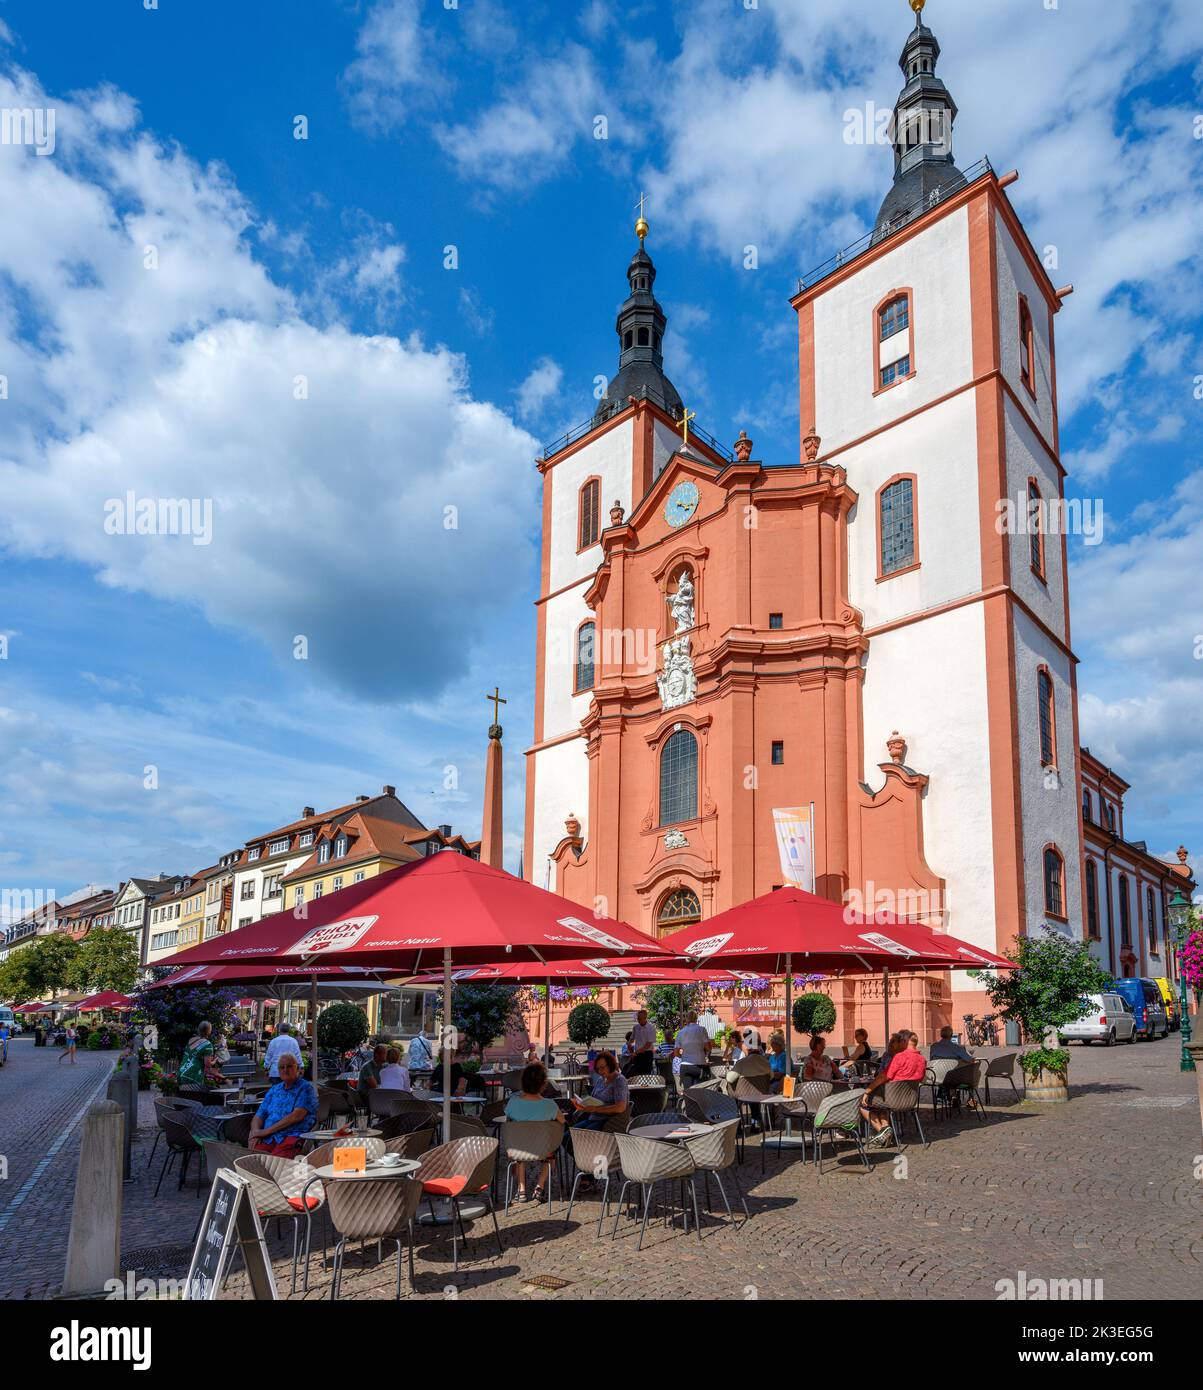 Caffè di fronte alla chiesa parrocchiale di San Biagio, Unterm Heilig Kreuz, Città Vecchia (Altstadt), Fulda, Germania Foto Stock